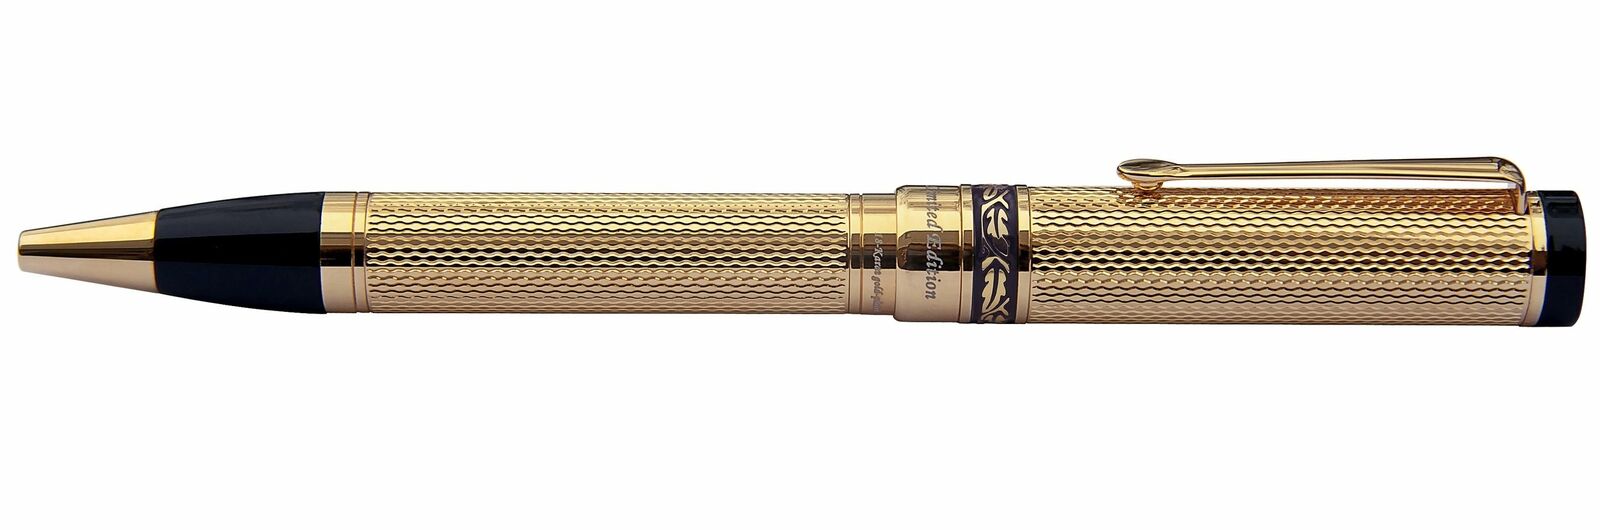 Xezo Tribune Diamond-cut Engraved Medium Ballpoint Pen,18K Gold Plated          